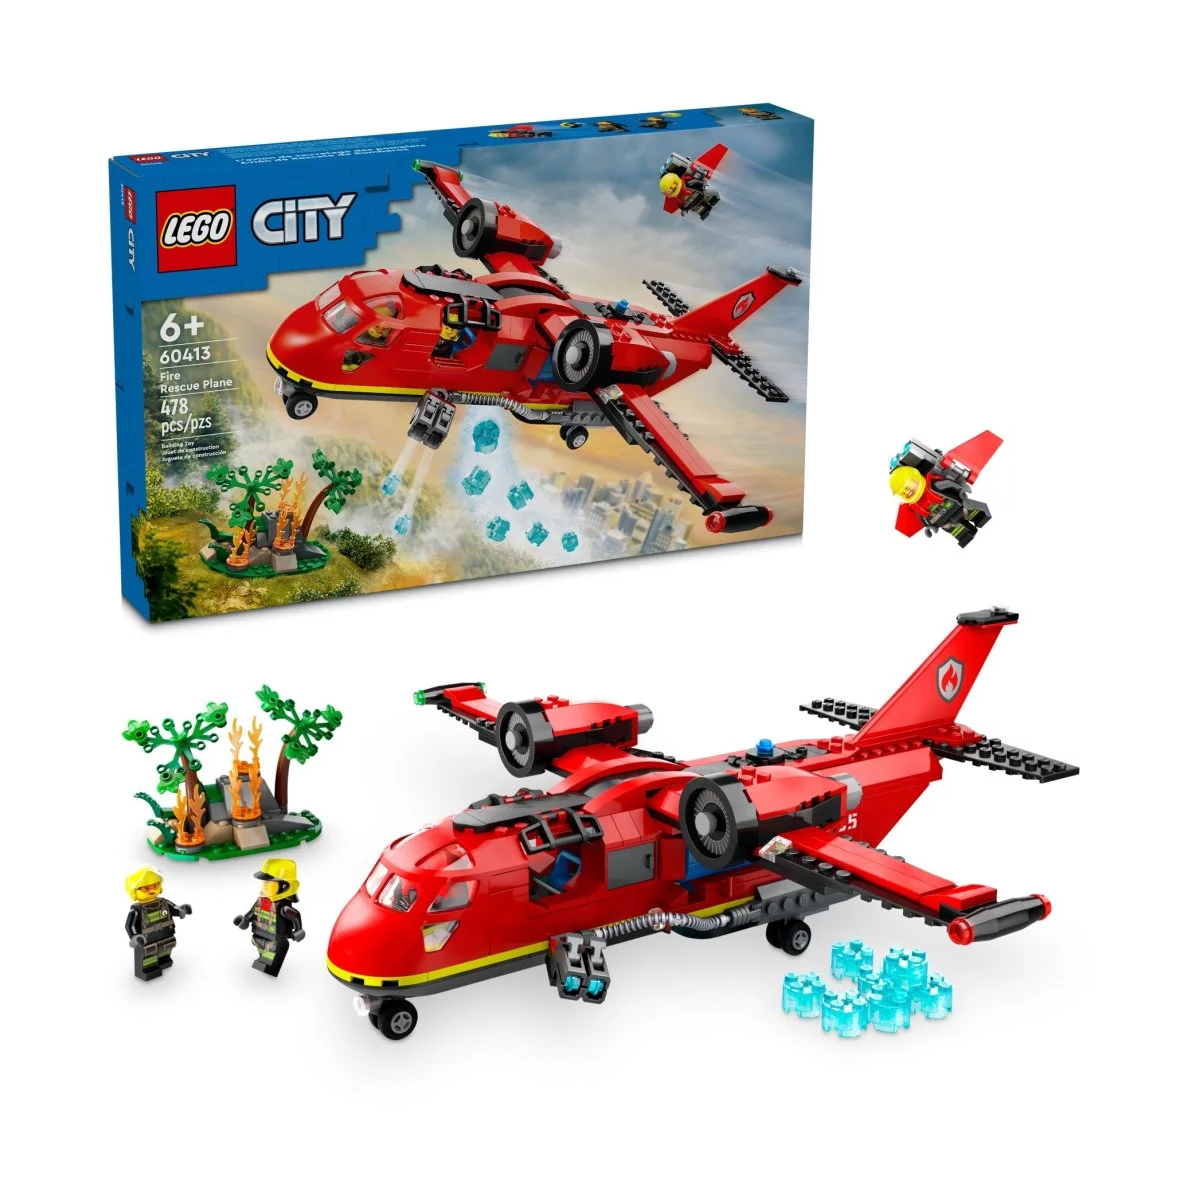 Конструктор Lego City Fire Rescue Plane 60413, 478 деталей